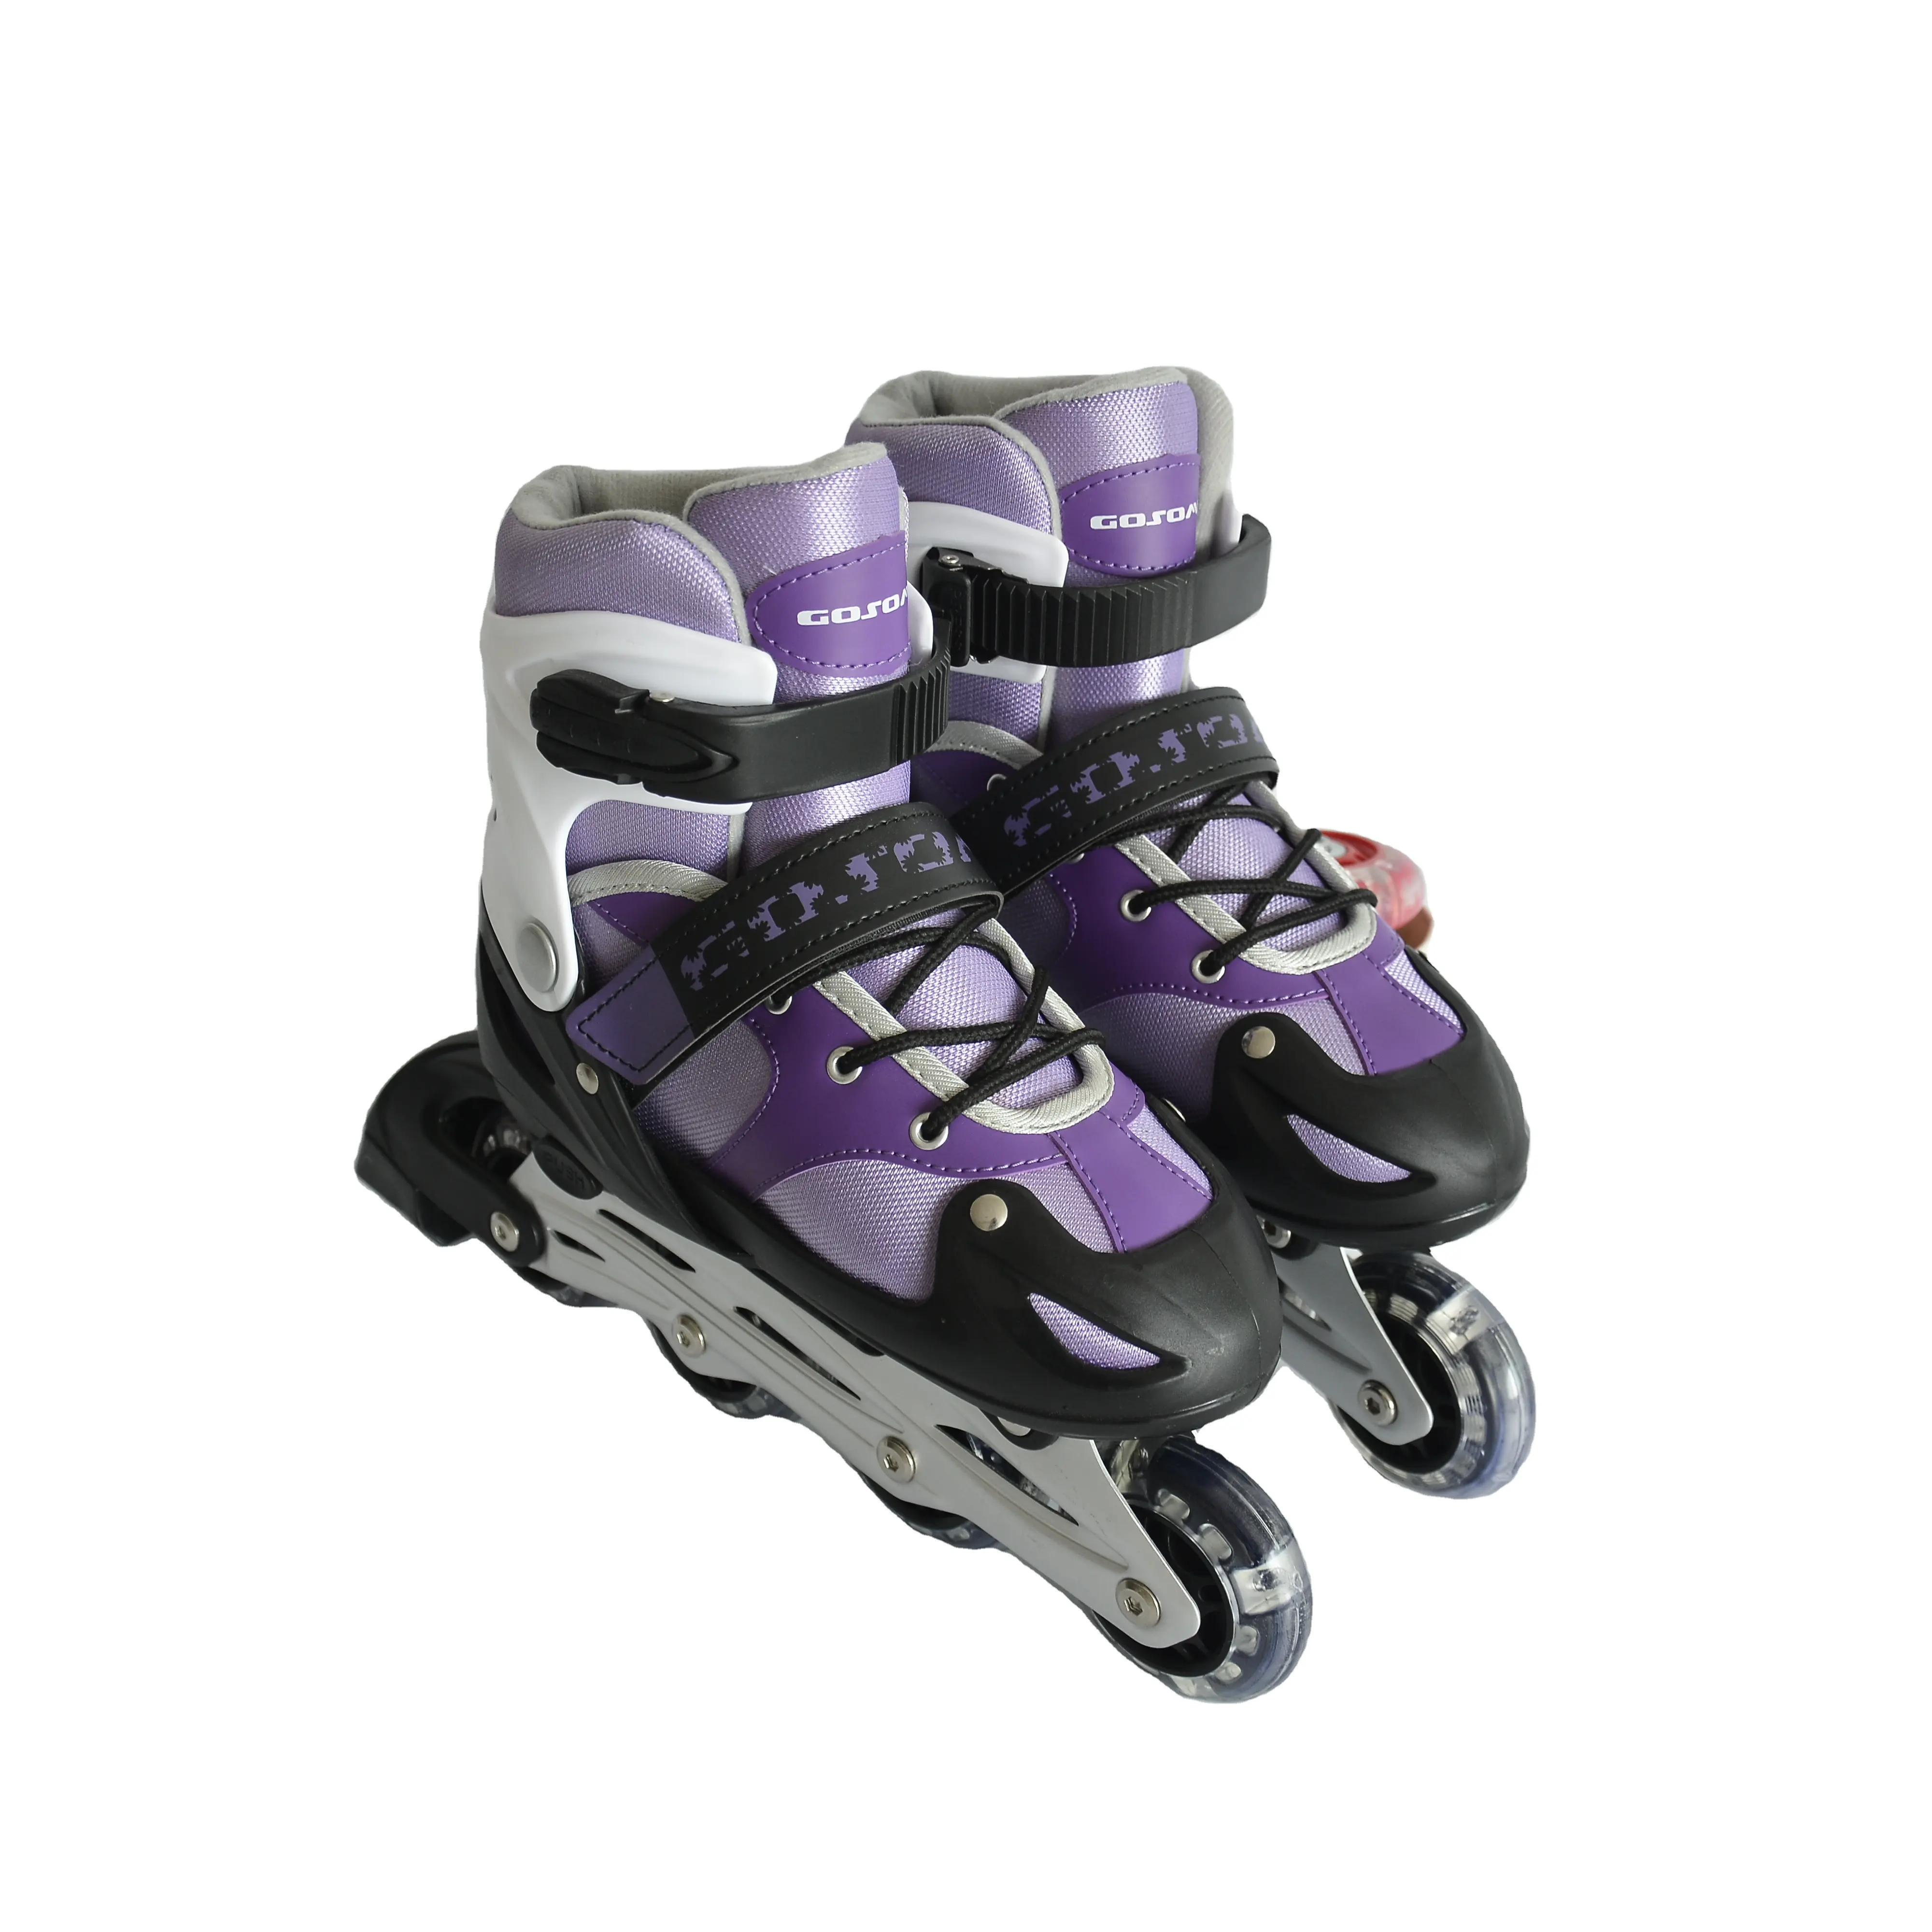 GOSOMEAdjustable 4 पीवीसी व्हील रोलर स्केटिंग जूते सस्ती कीमत पर बिक्री के लिए उच्च गुणवत्ता वाले हॉट क्वाड इनलाइन स्केट